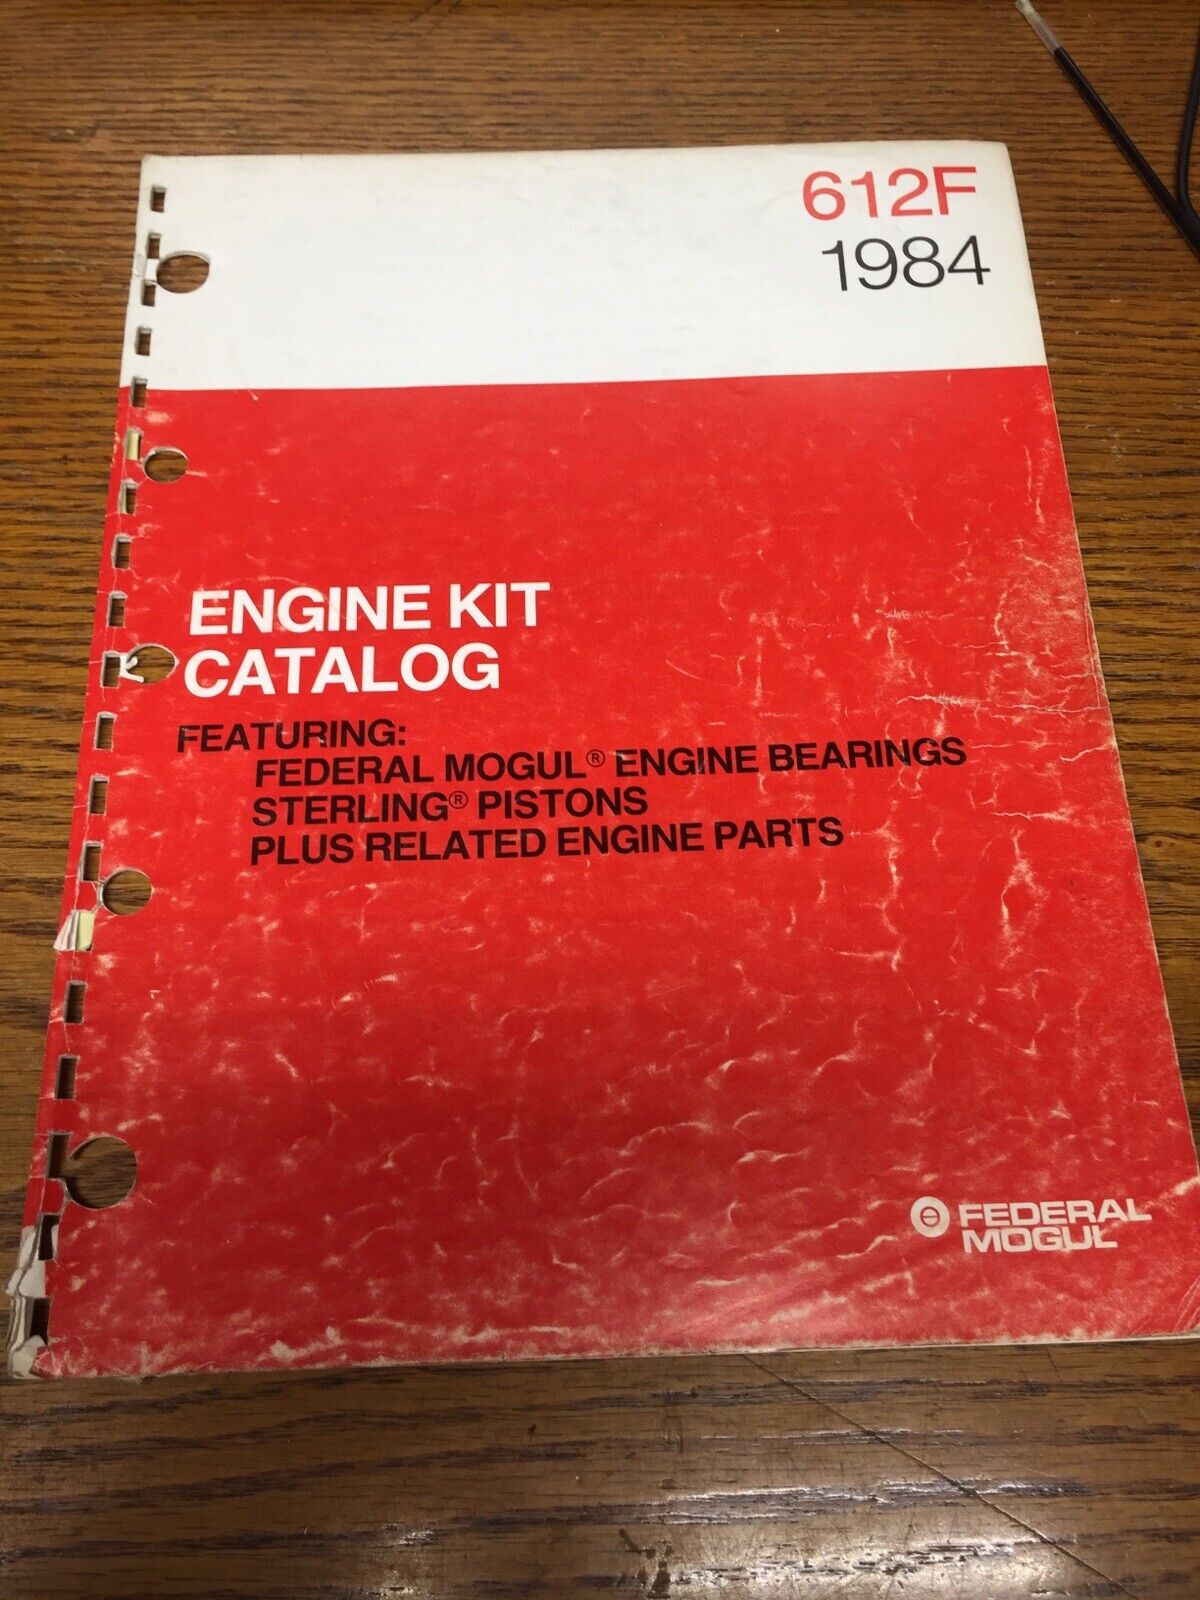 Vintage 1984 FEDERAL-MOGUL Sterling Pistons Engine Kit Catalog 612f